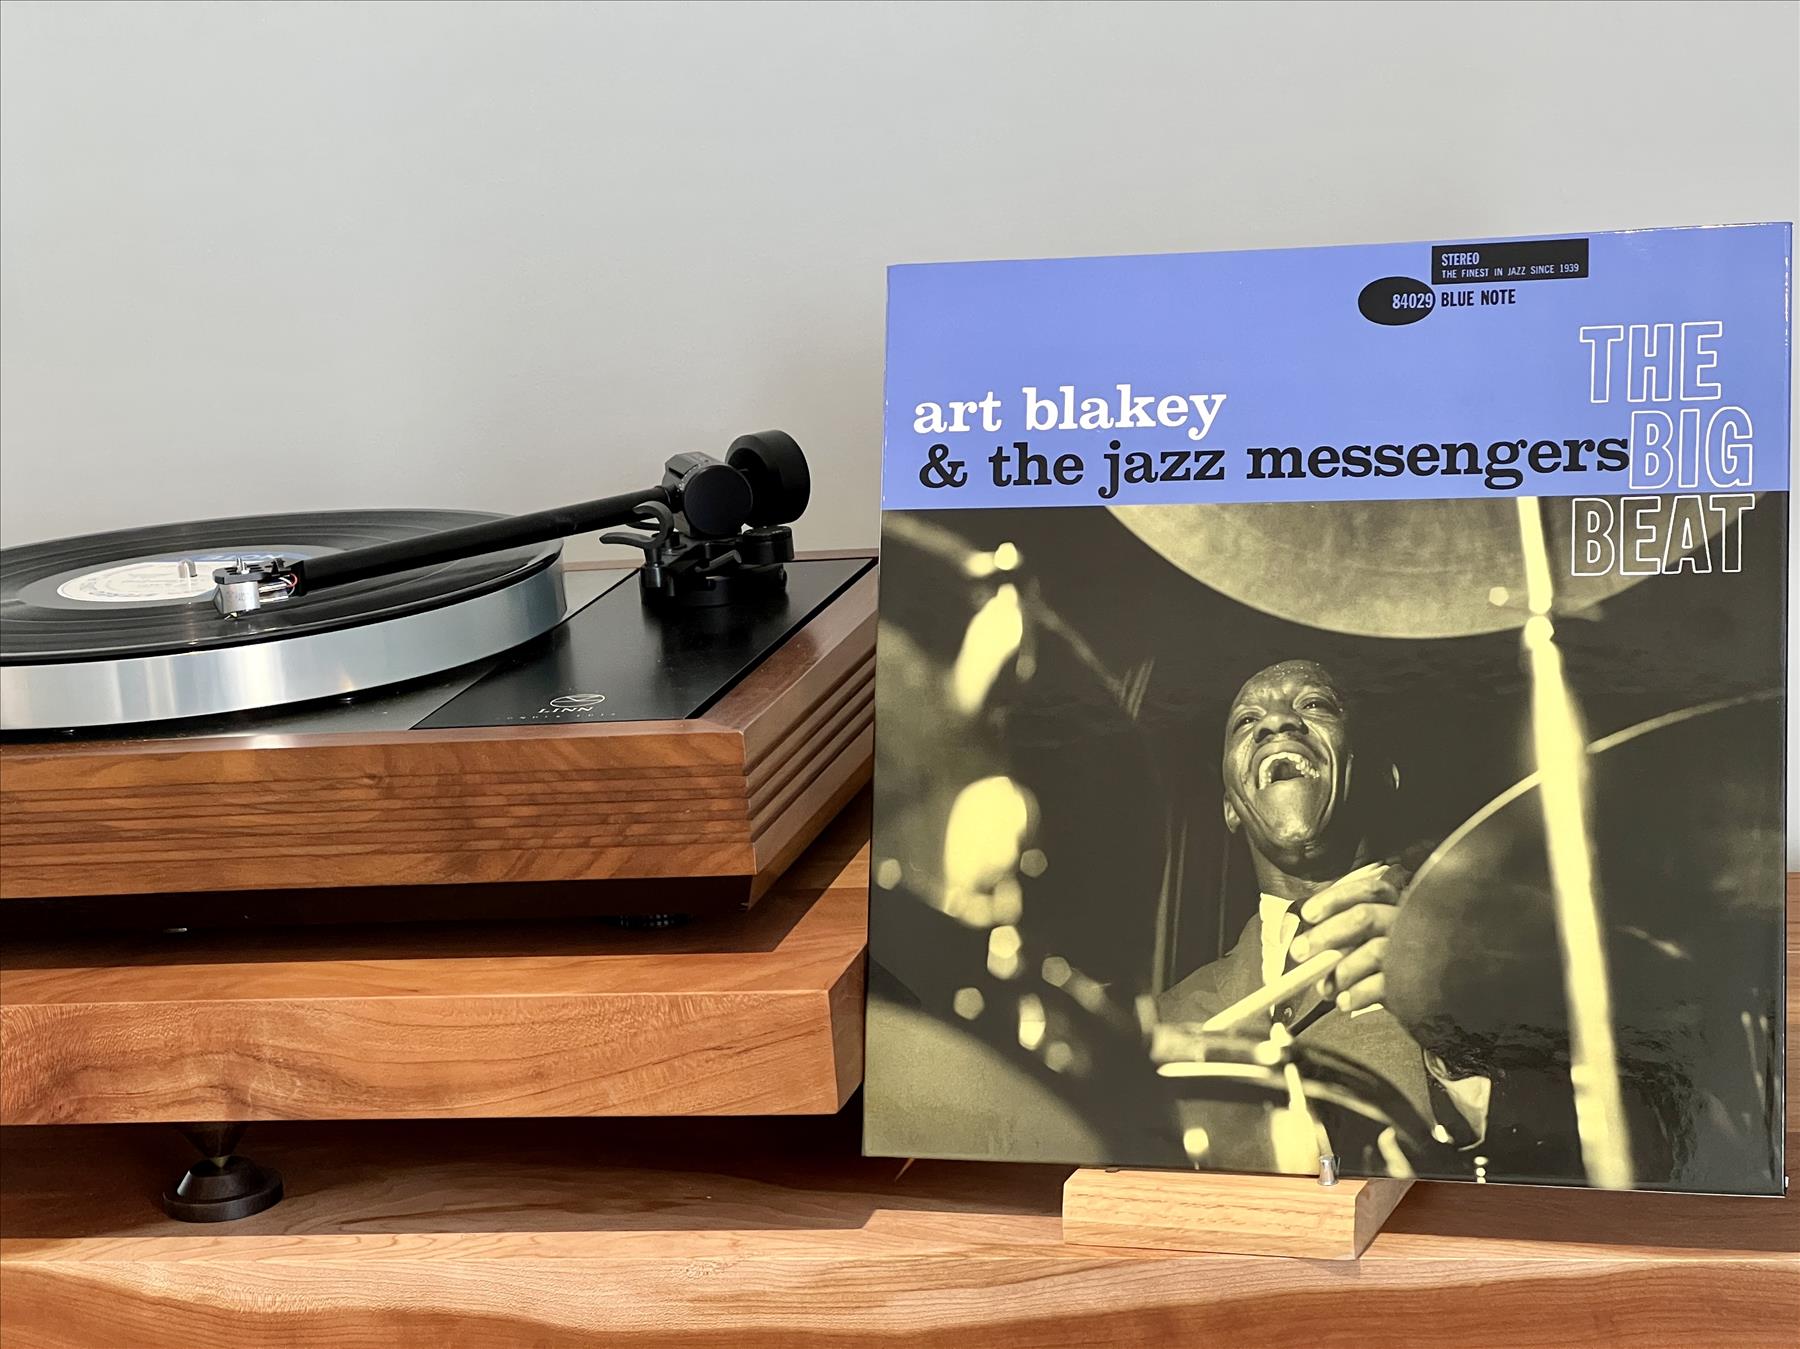 The Big Beat: Art Blakey and the jazz messengers